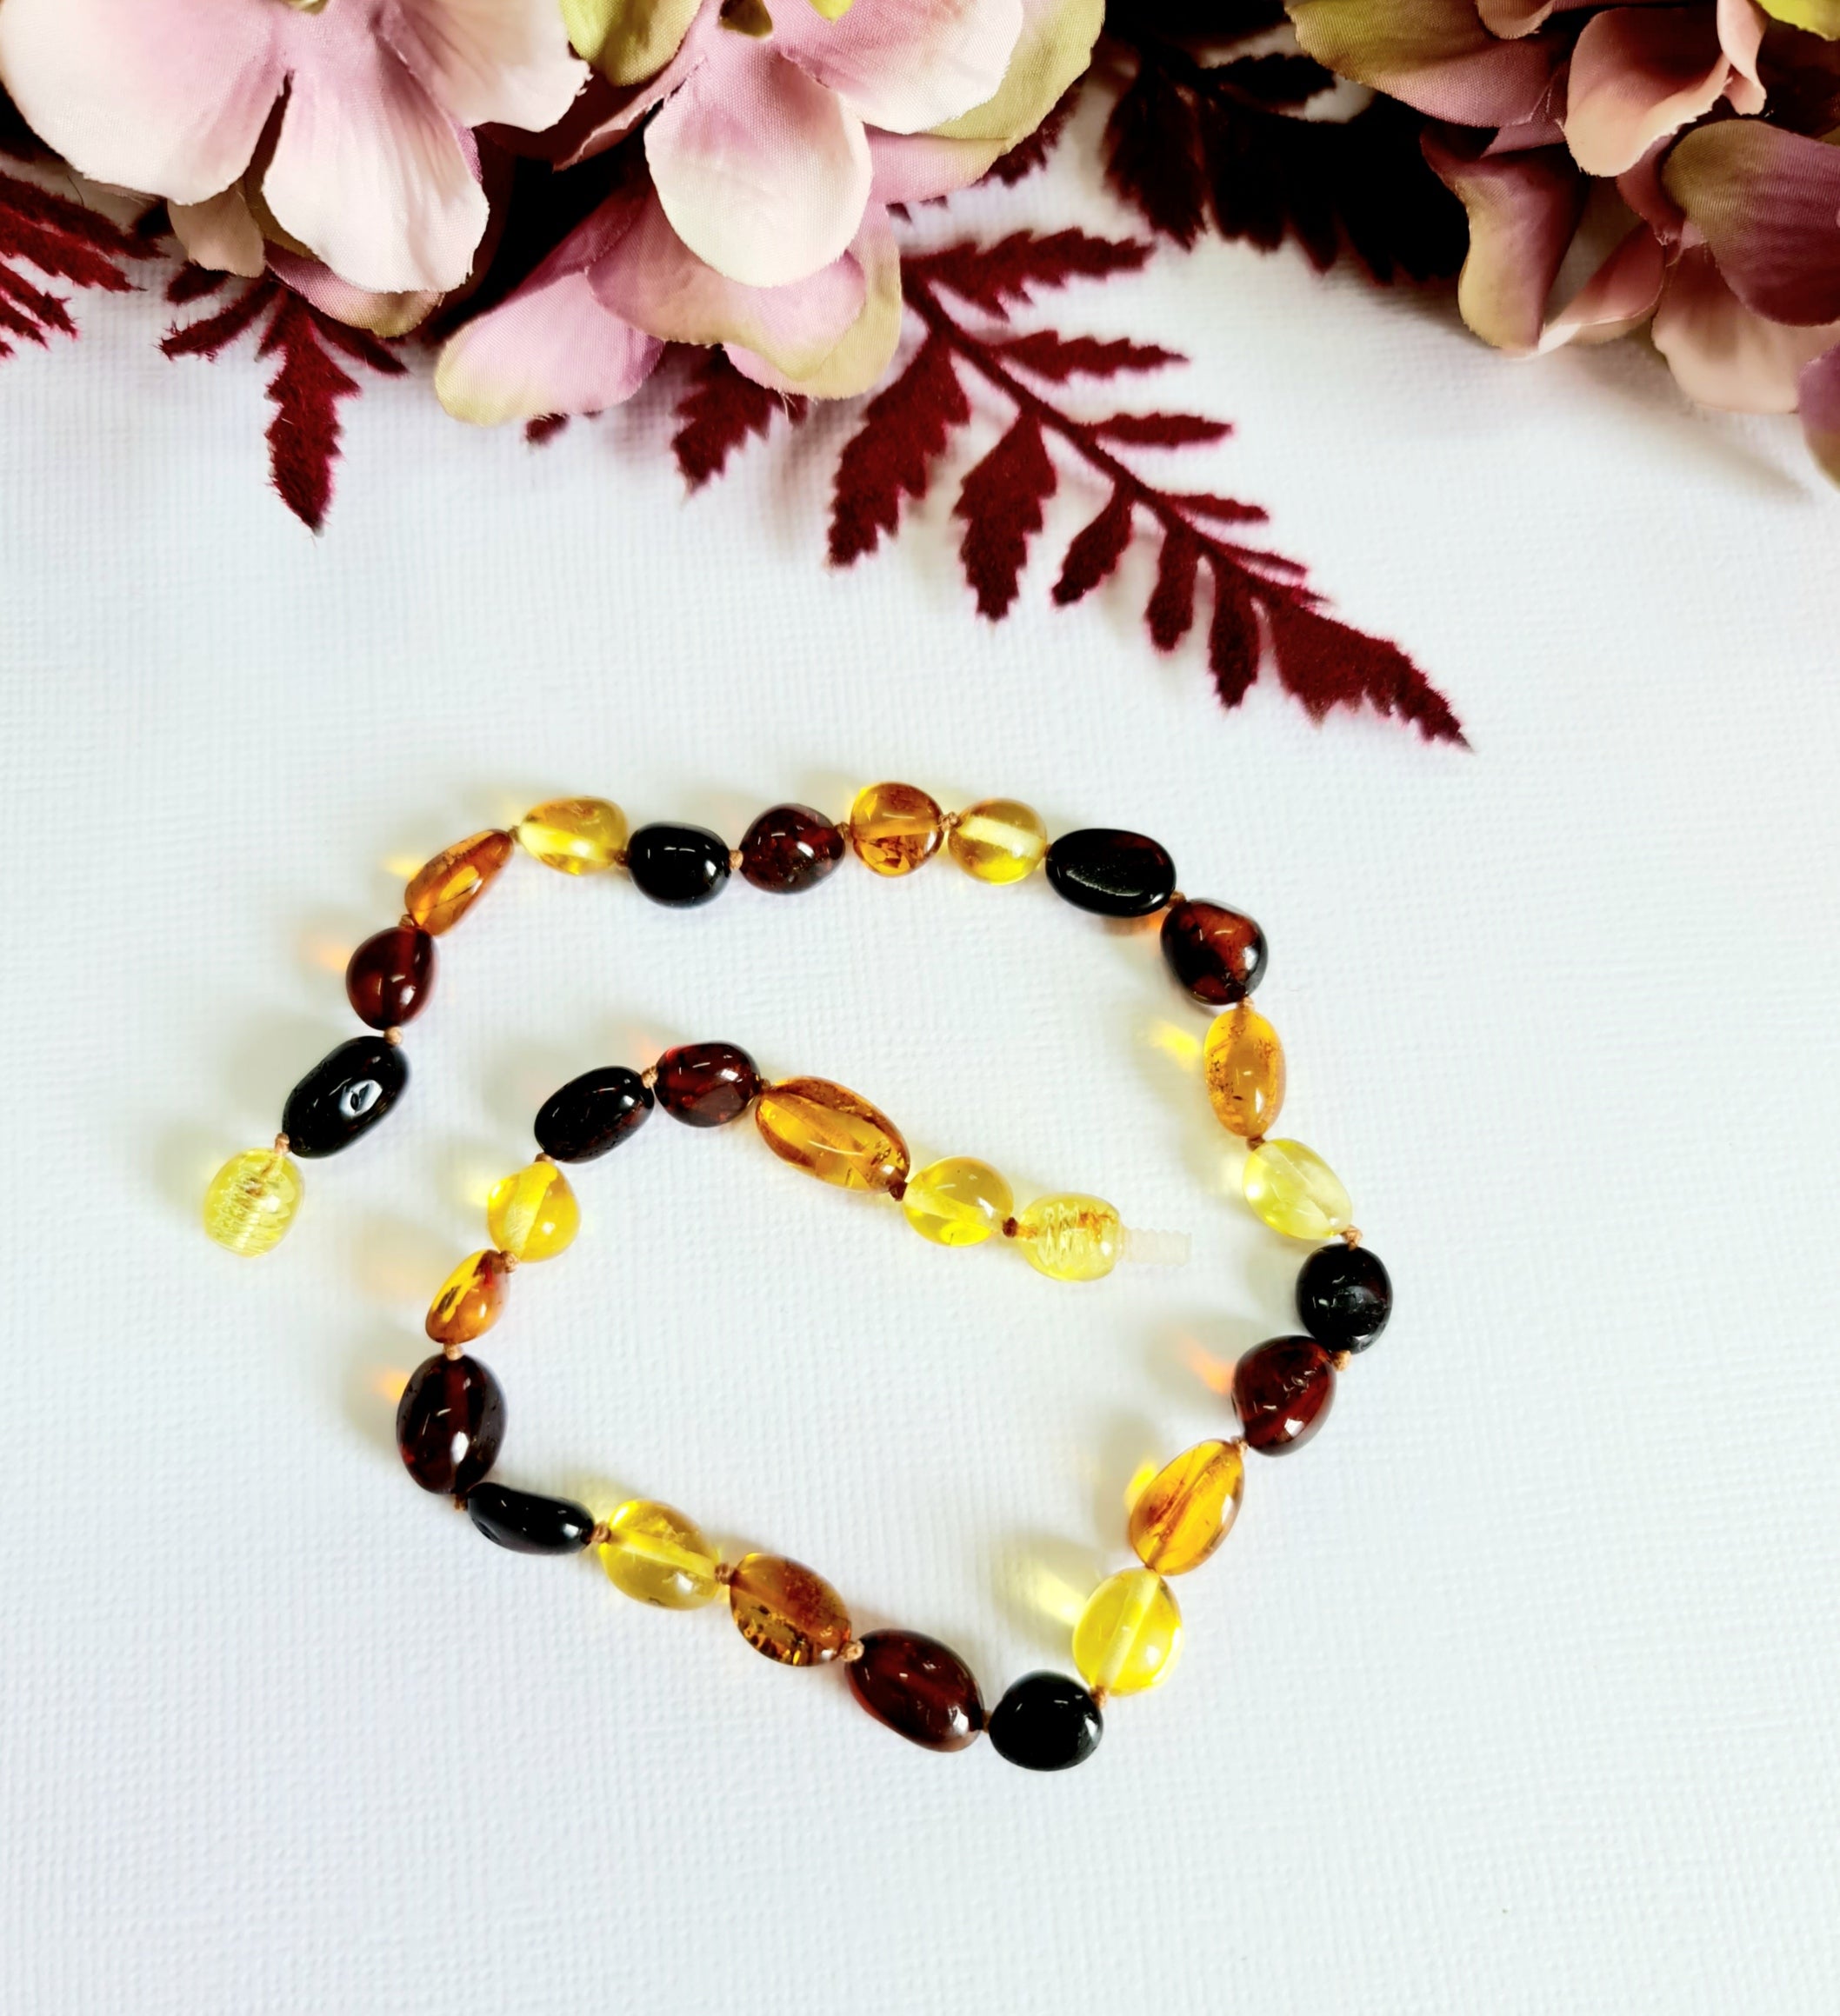 Mixed Amber Large Bean Shaped Natural Baltic Amber Necklace